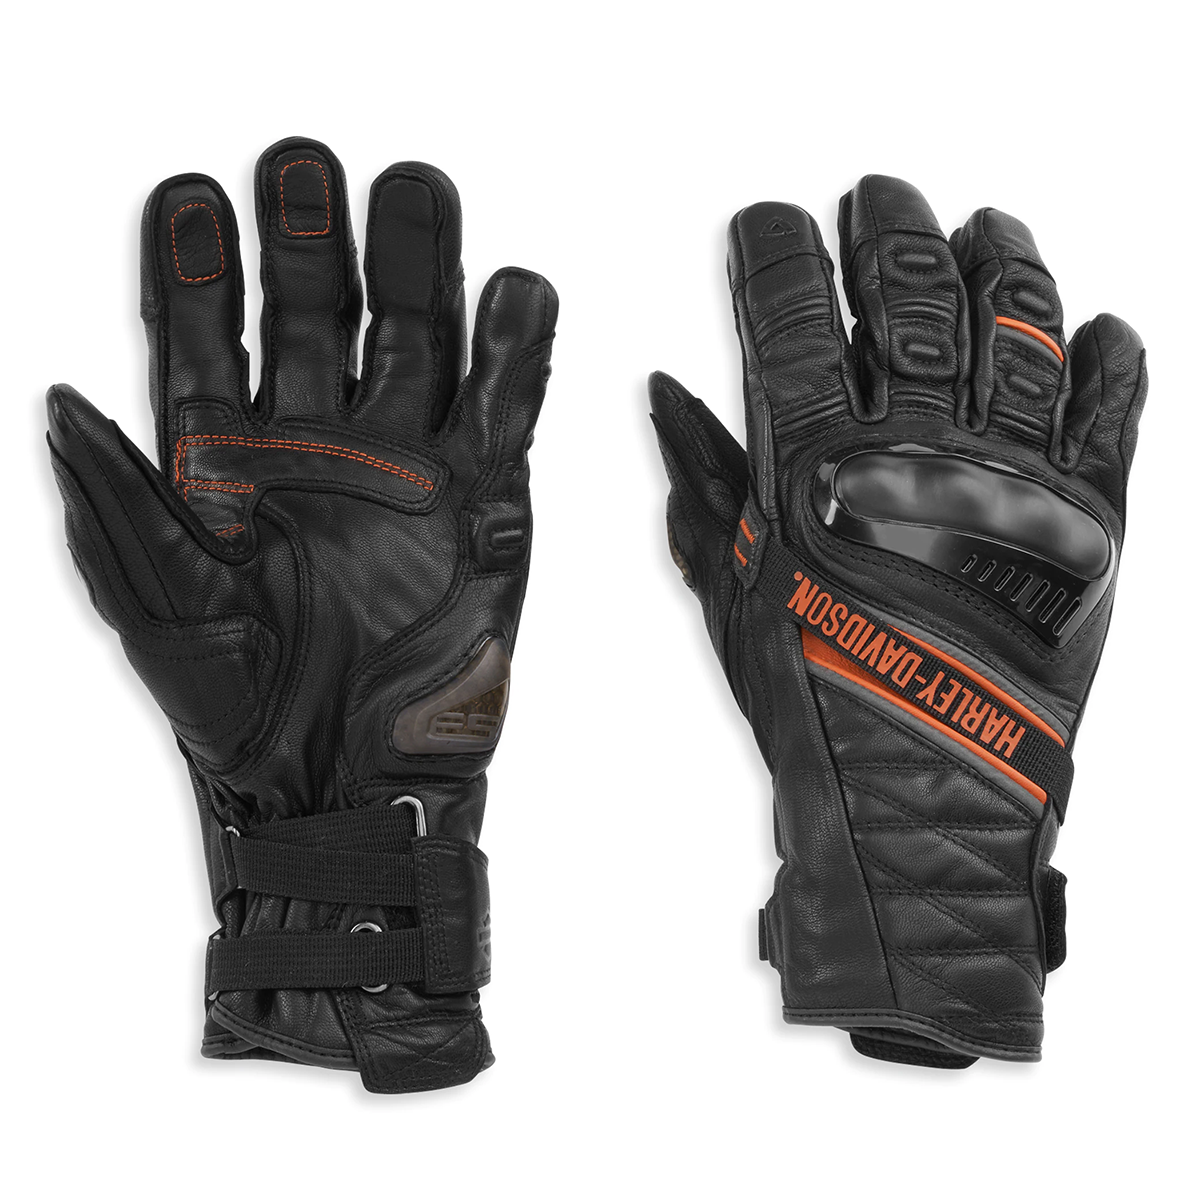 Harley-Davidson Men's Waterproof Passage Adventure Gauntlet Gloves